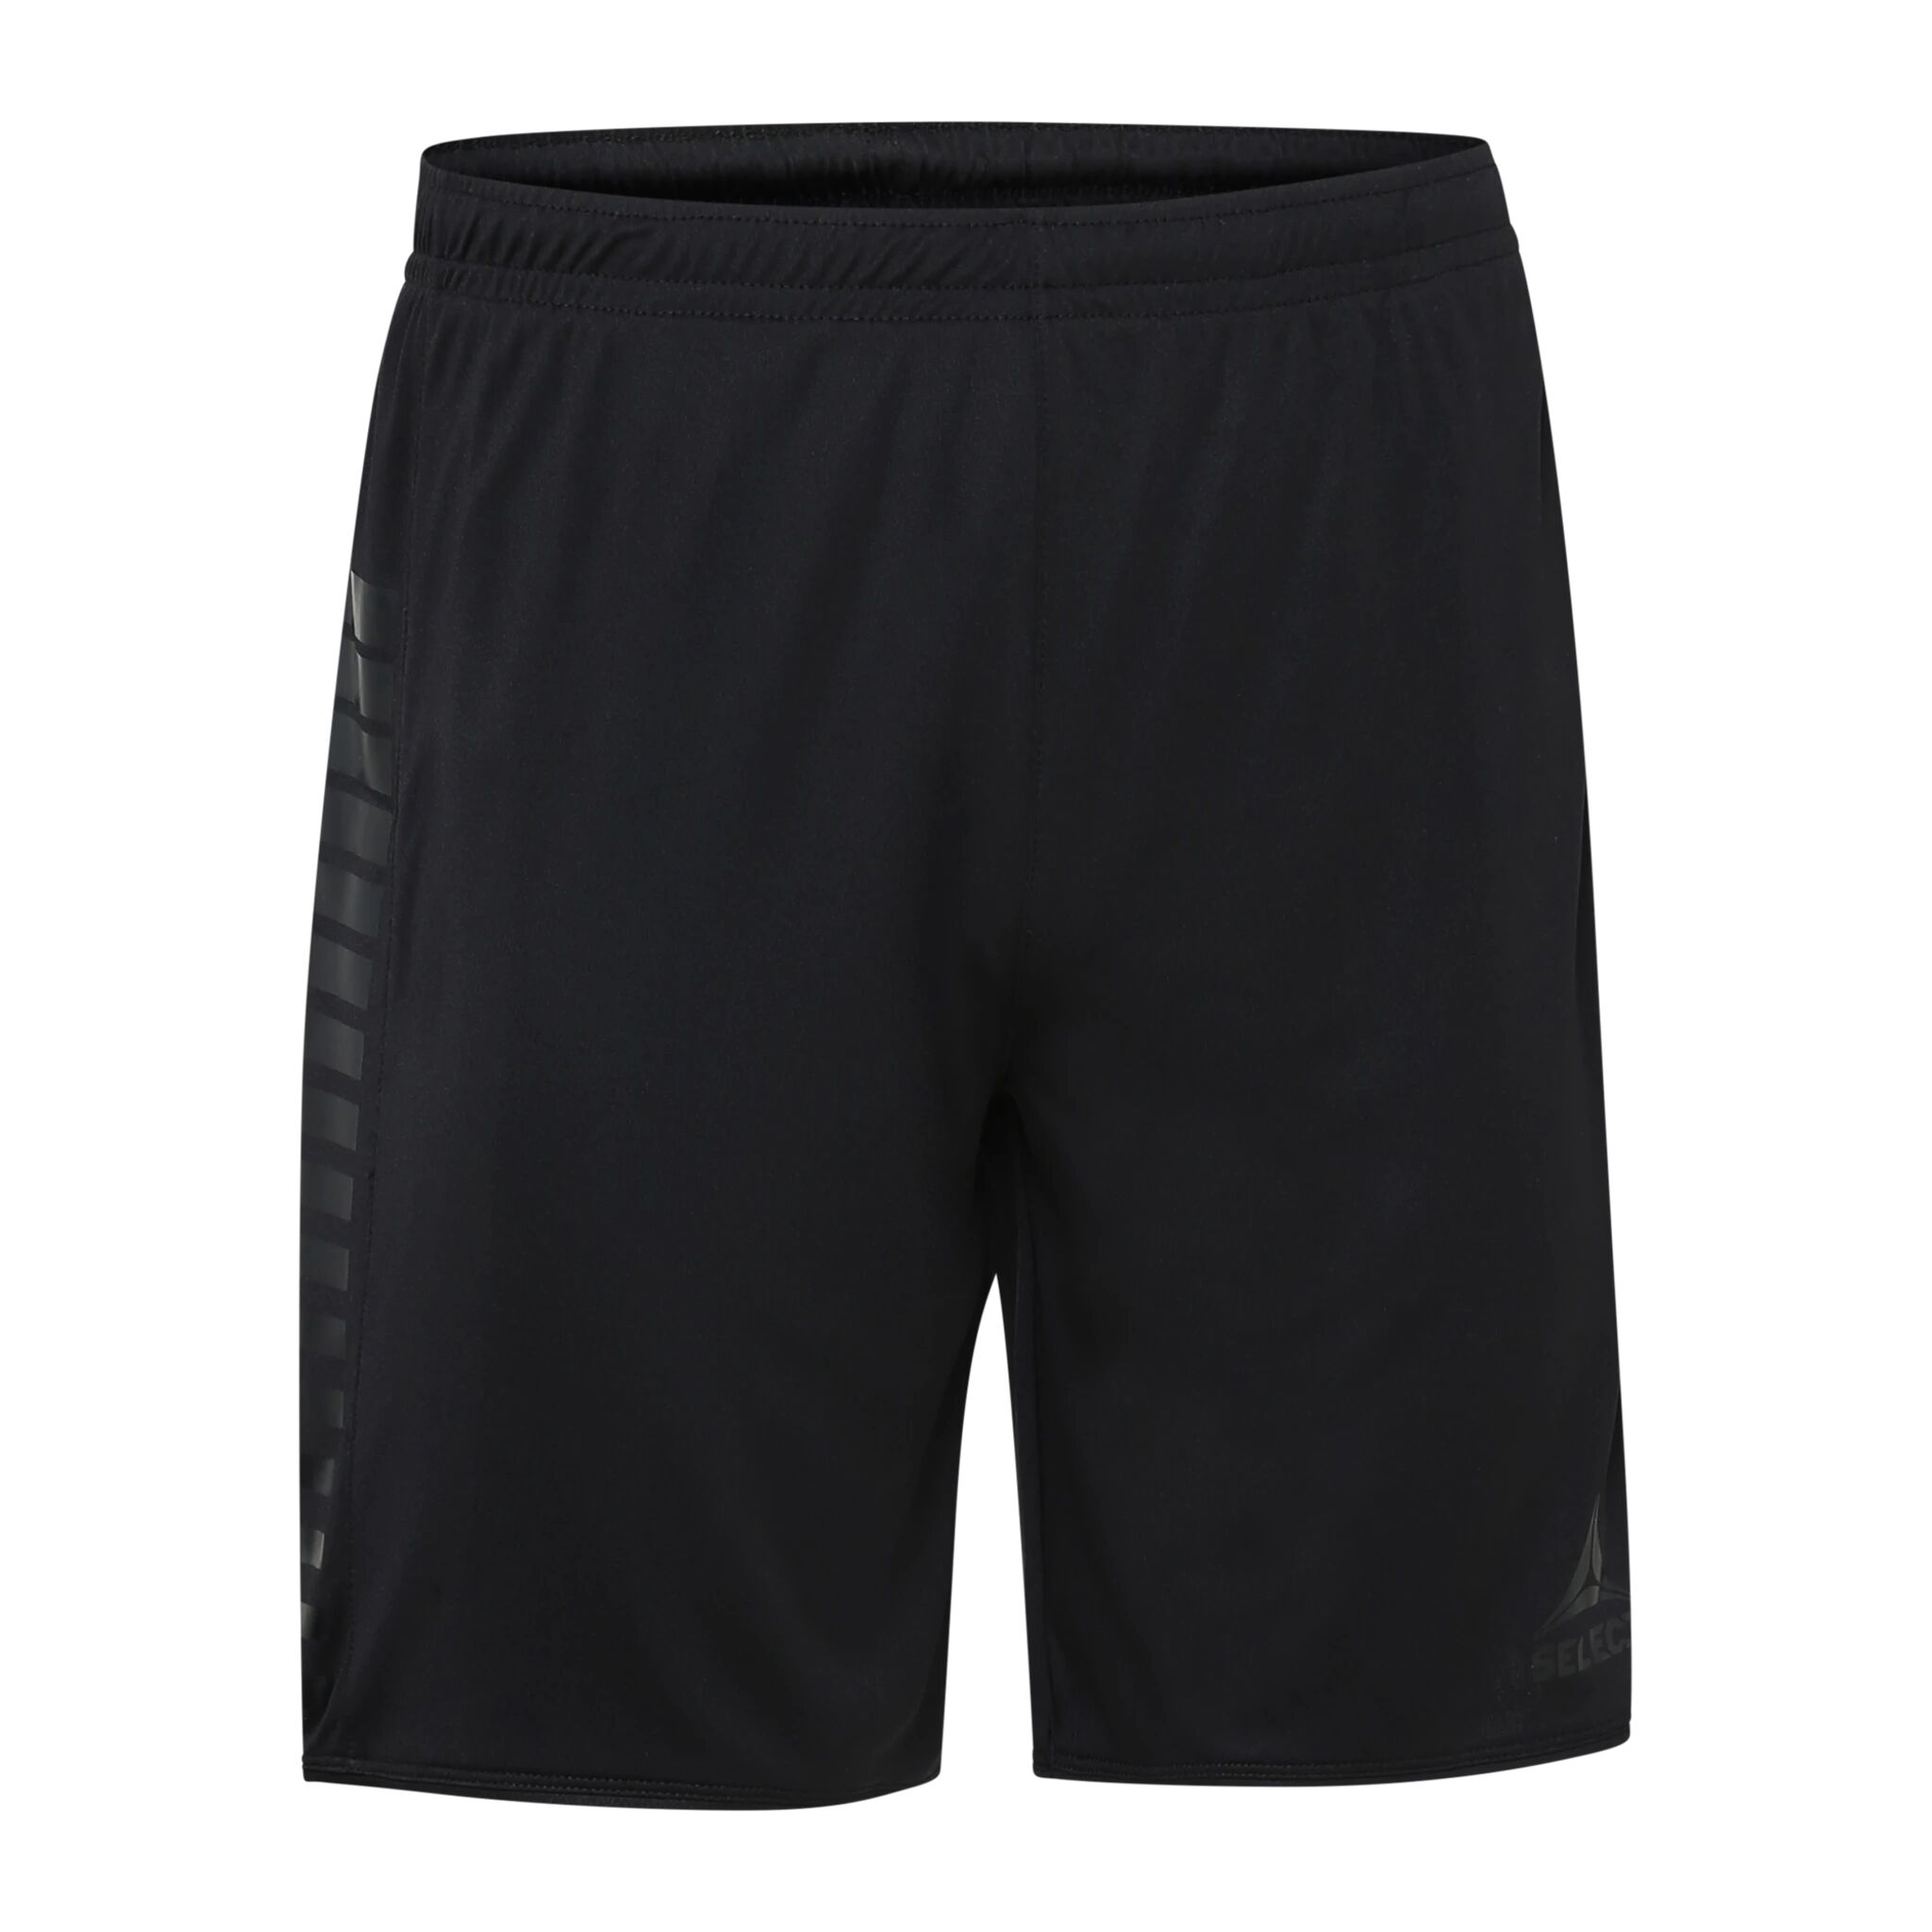 Select Player shorts Argentina, shorts Junior/Senior XXXL BLACK/BLACK